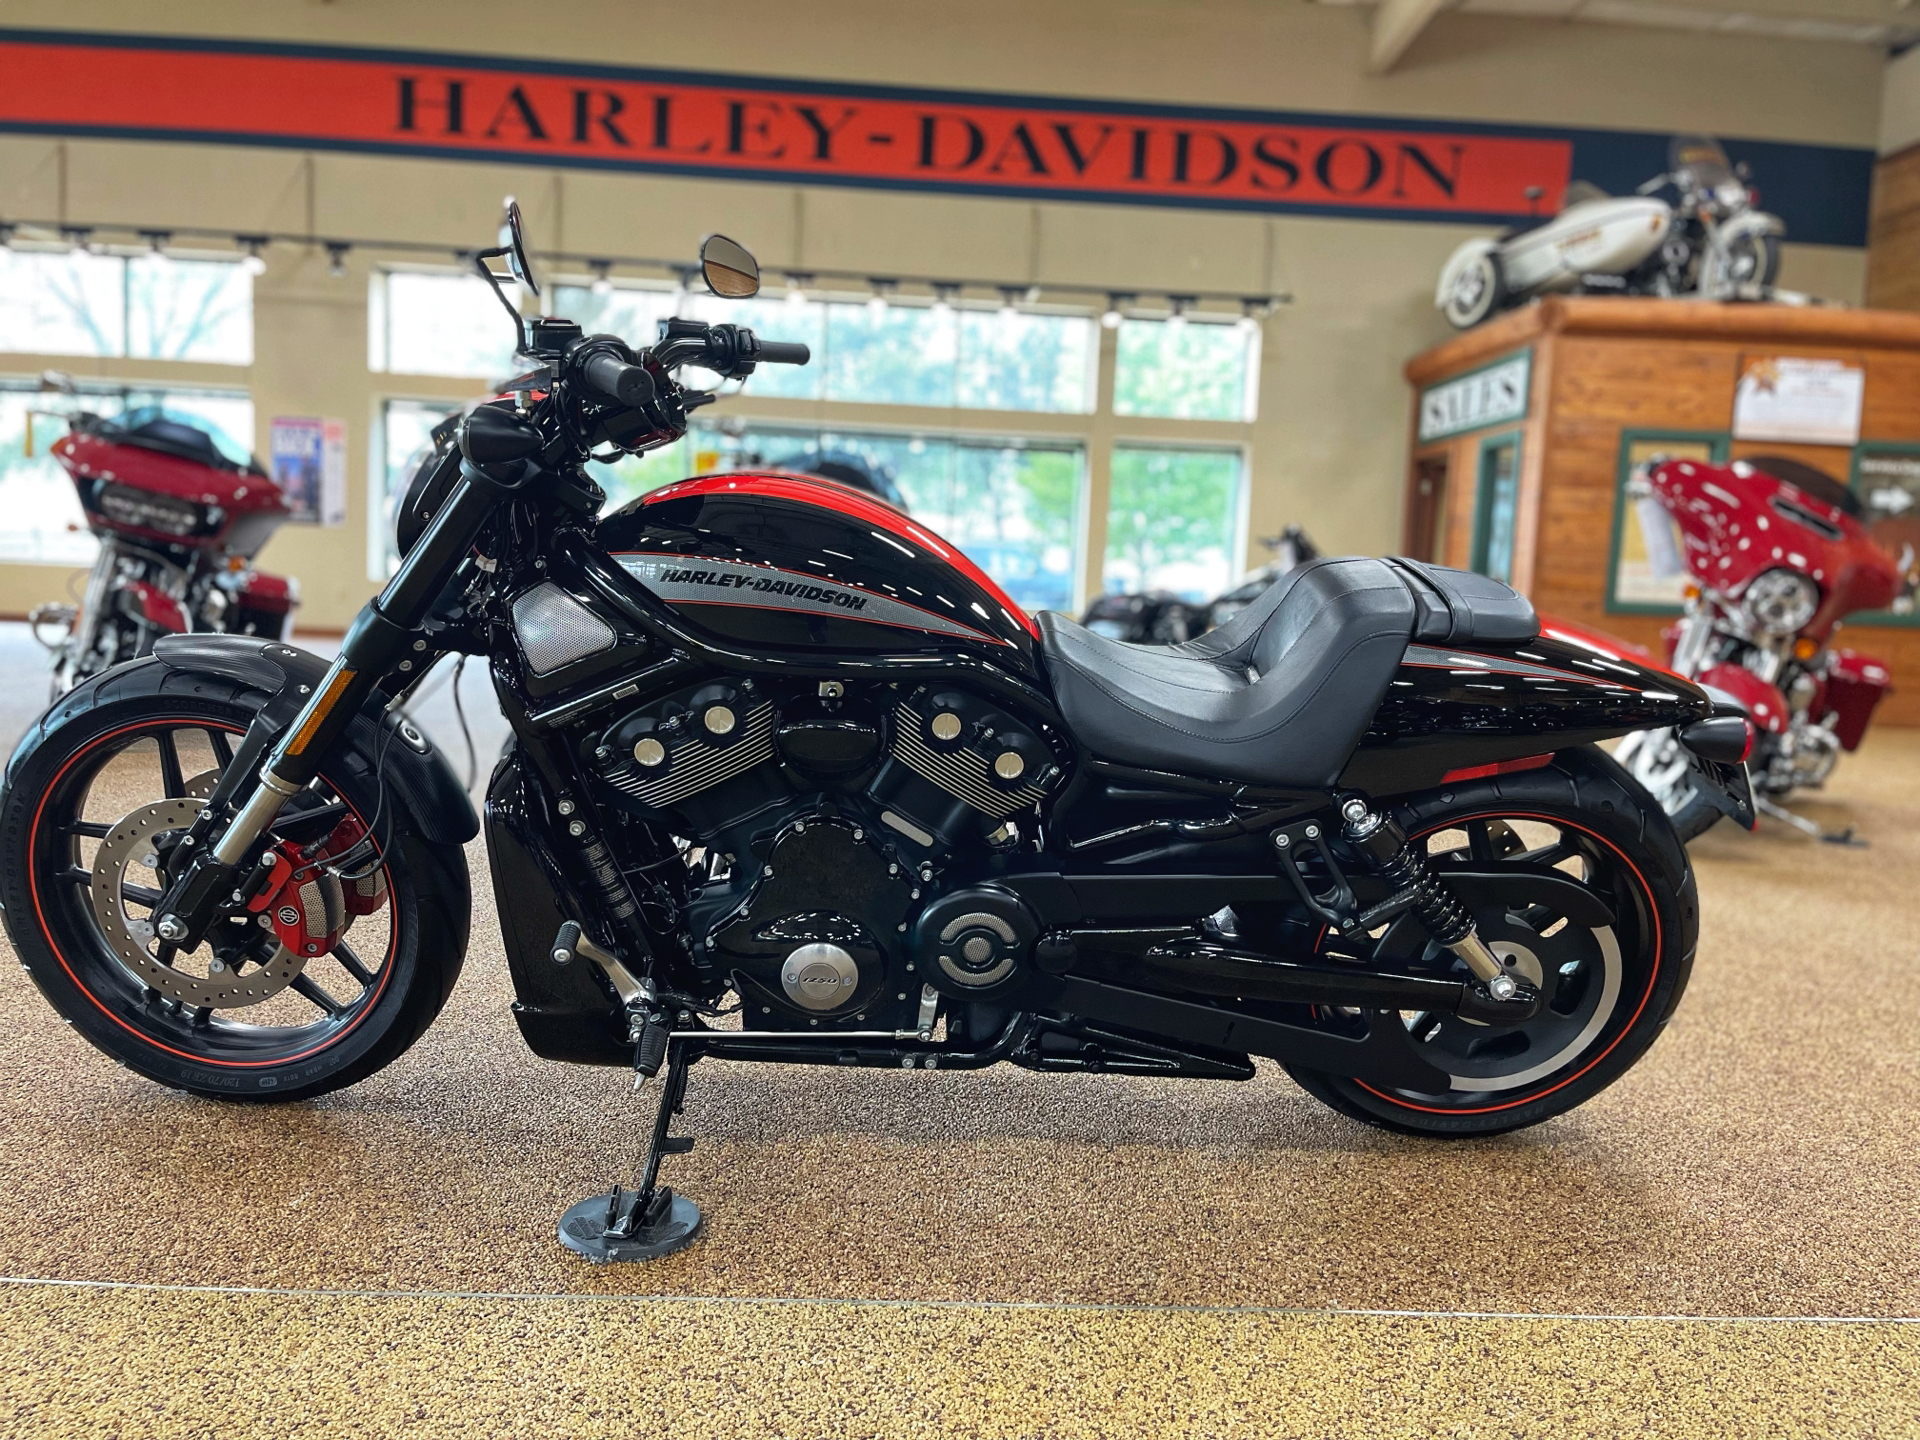 Used 2016 Harley Davidson Night Rod Special Vivid Black Motorcycles In Sauk Rapids Mn B0024